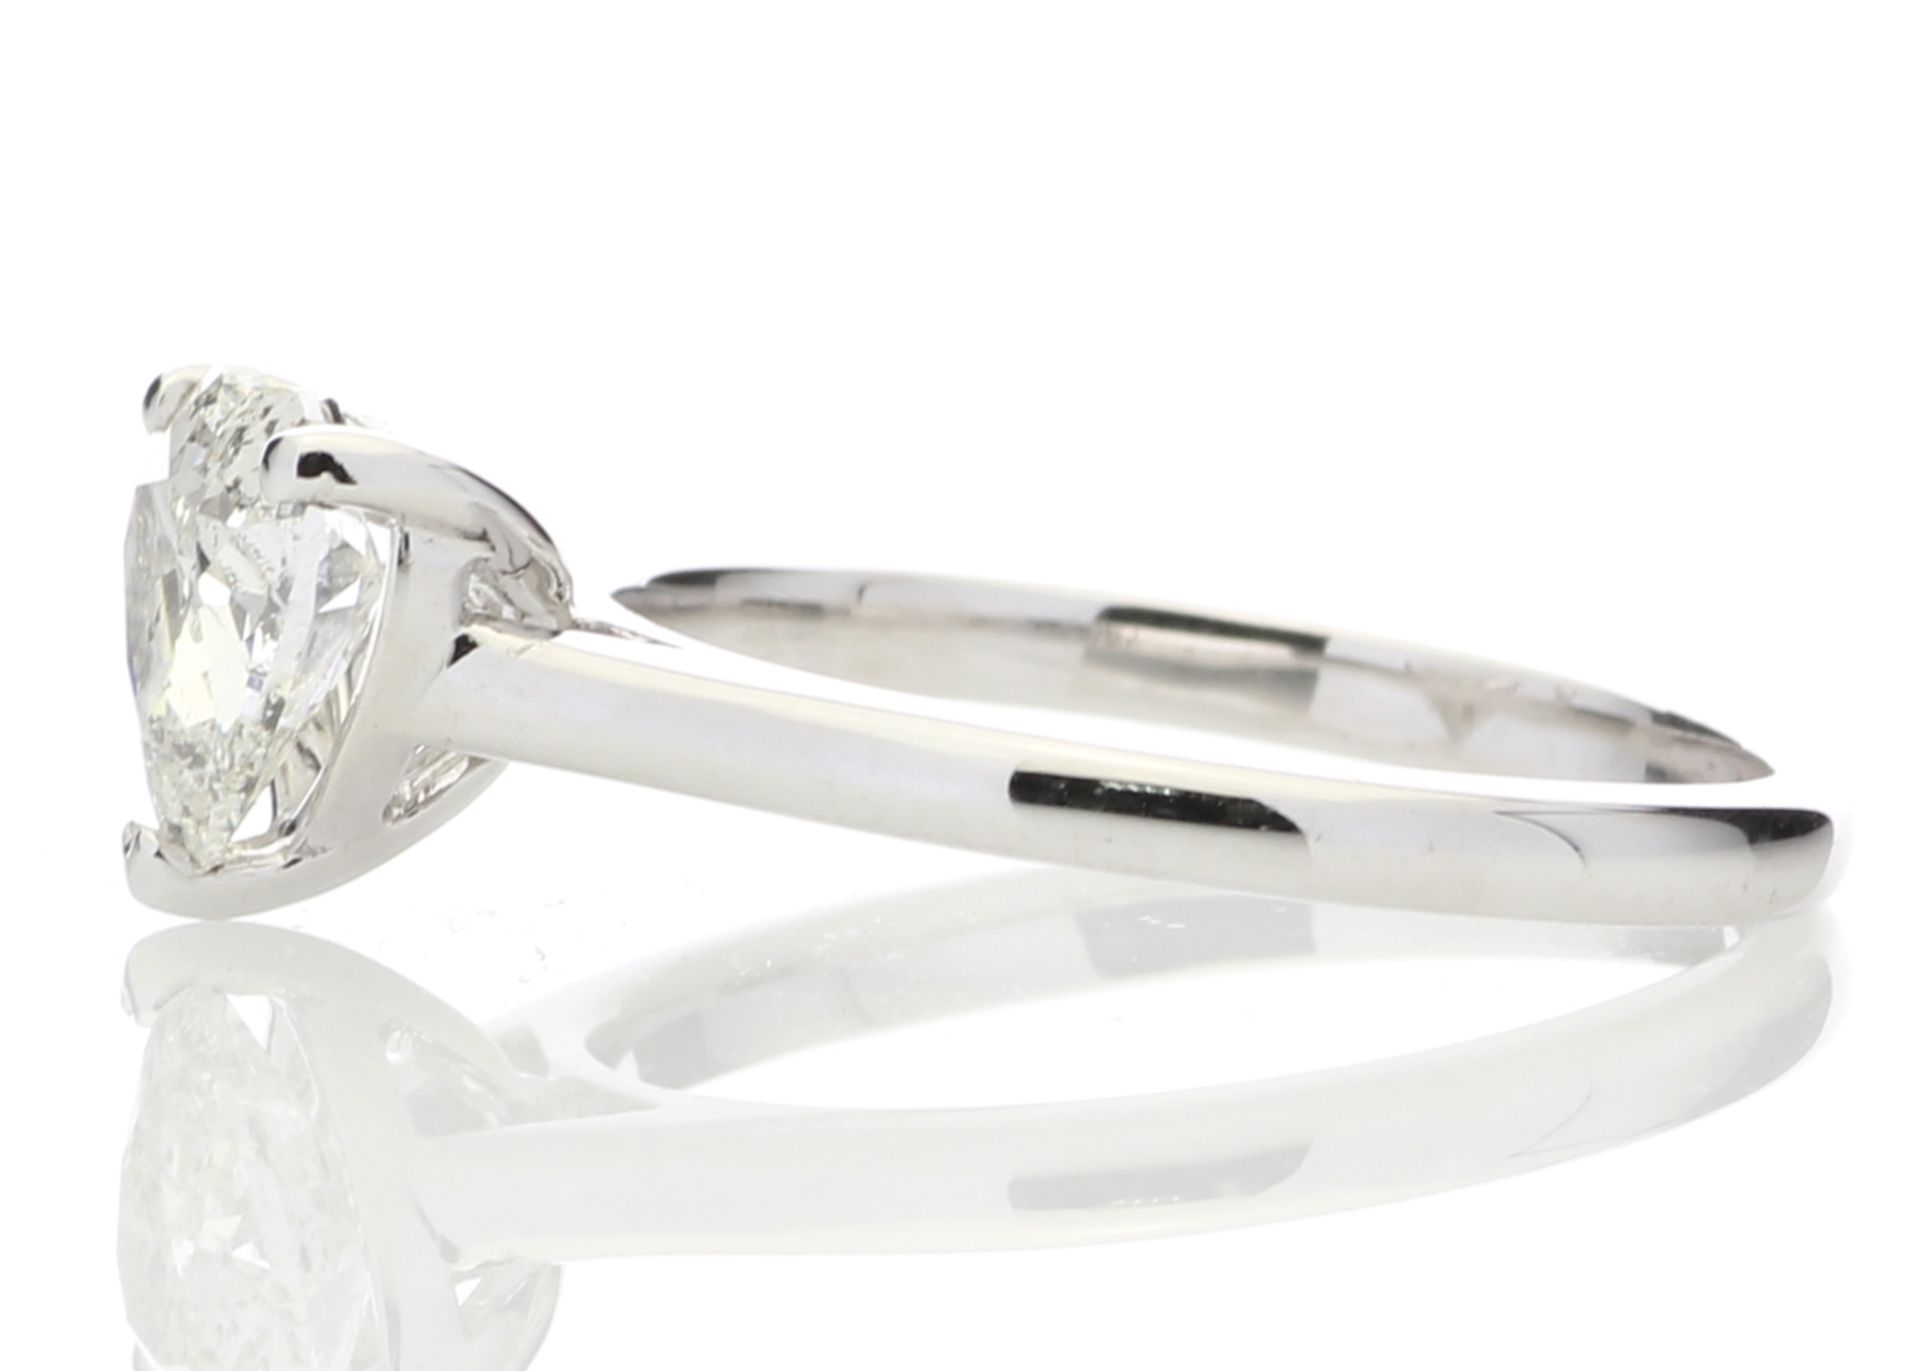 18ct White Gold Single Stone Heart Cut Diamond Ring 1.04 Carats - Image 3 of 5